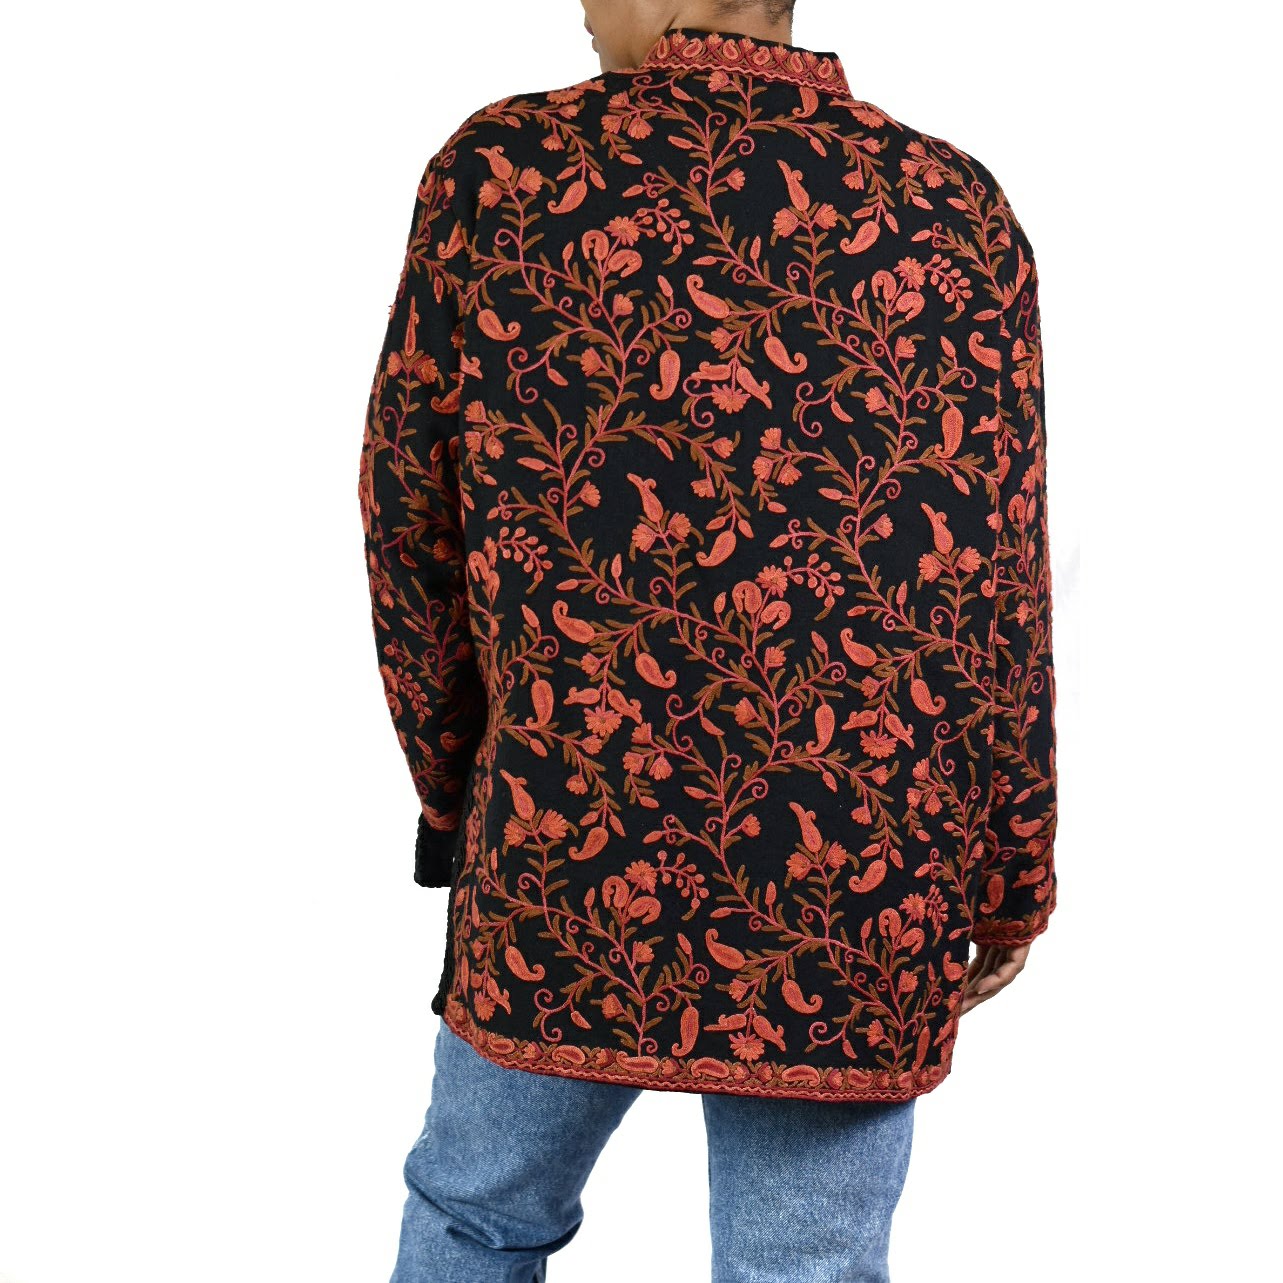 Kashmiri Embroidered Jacket Size Medium